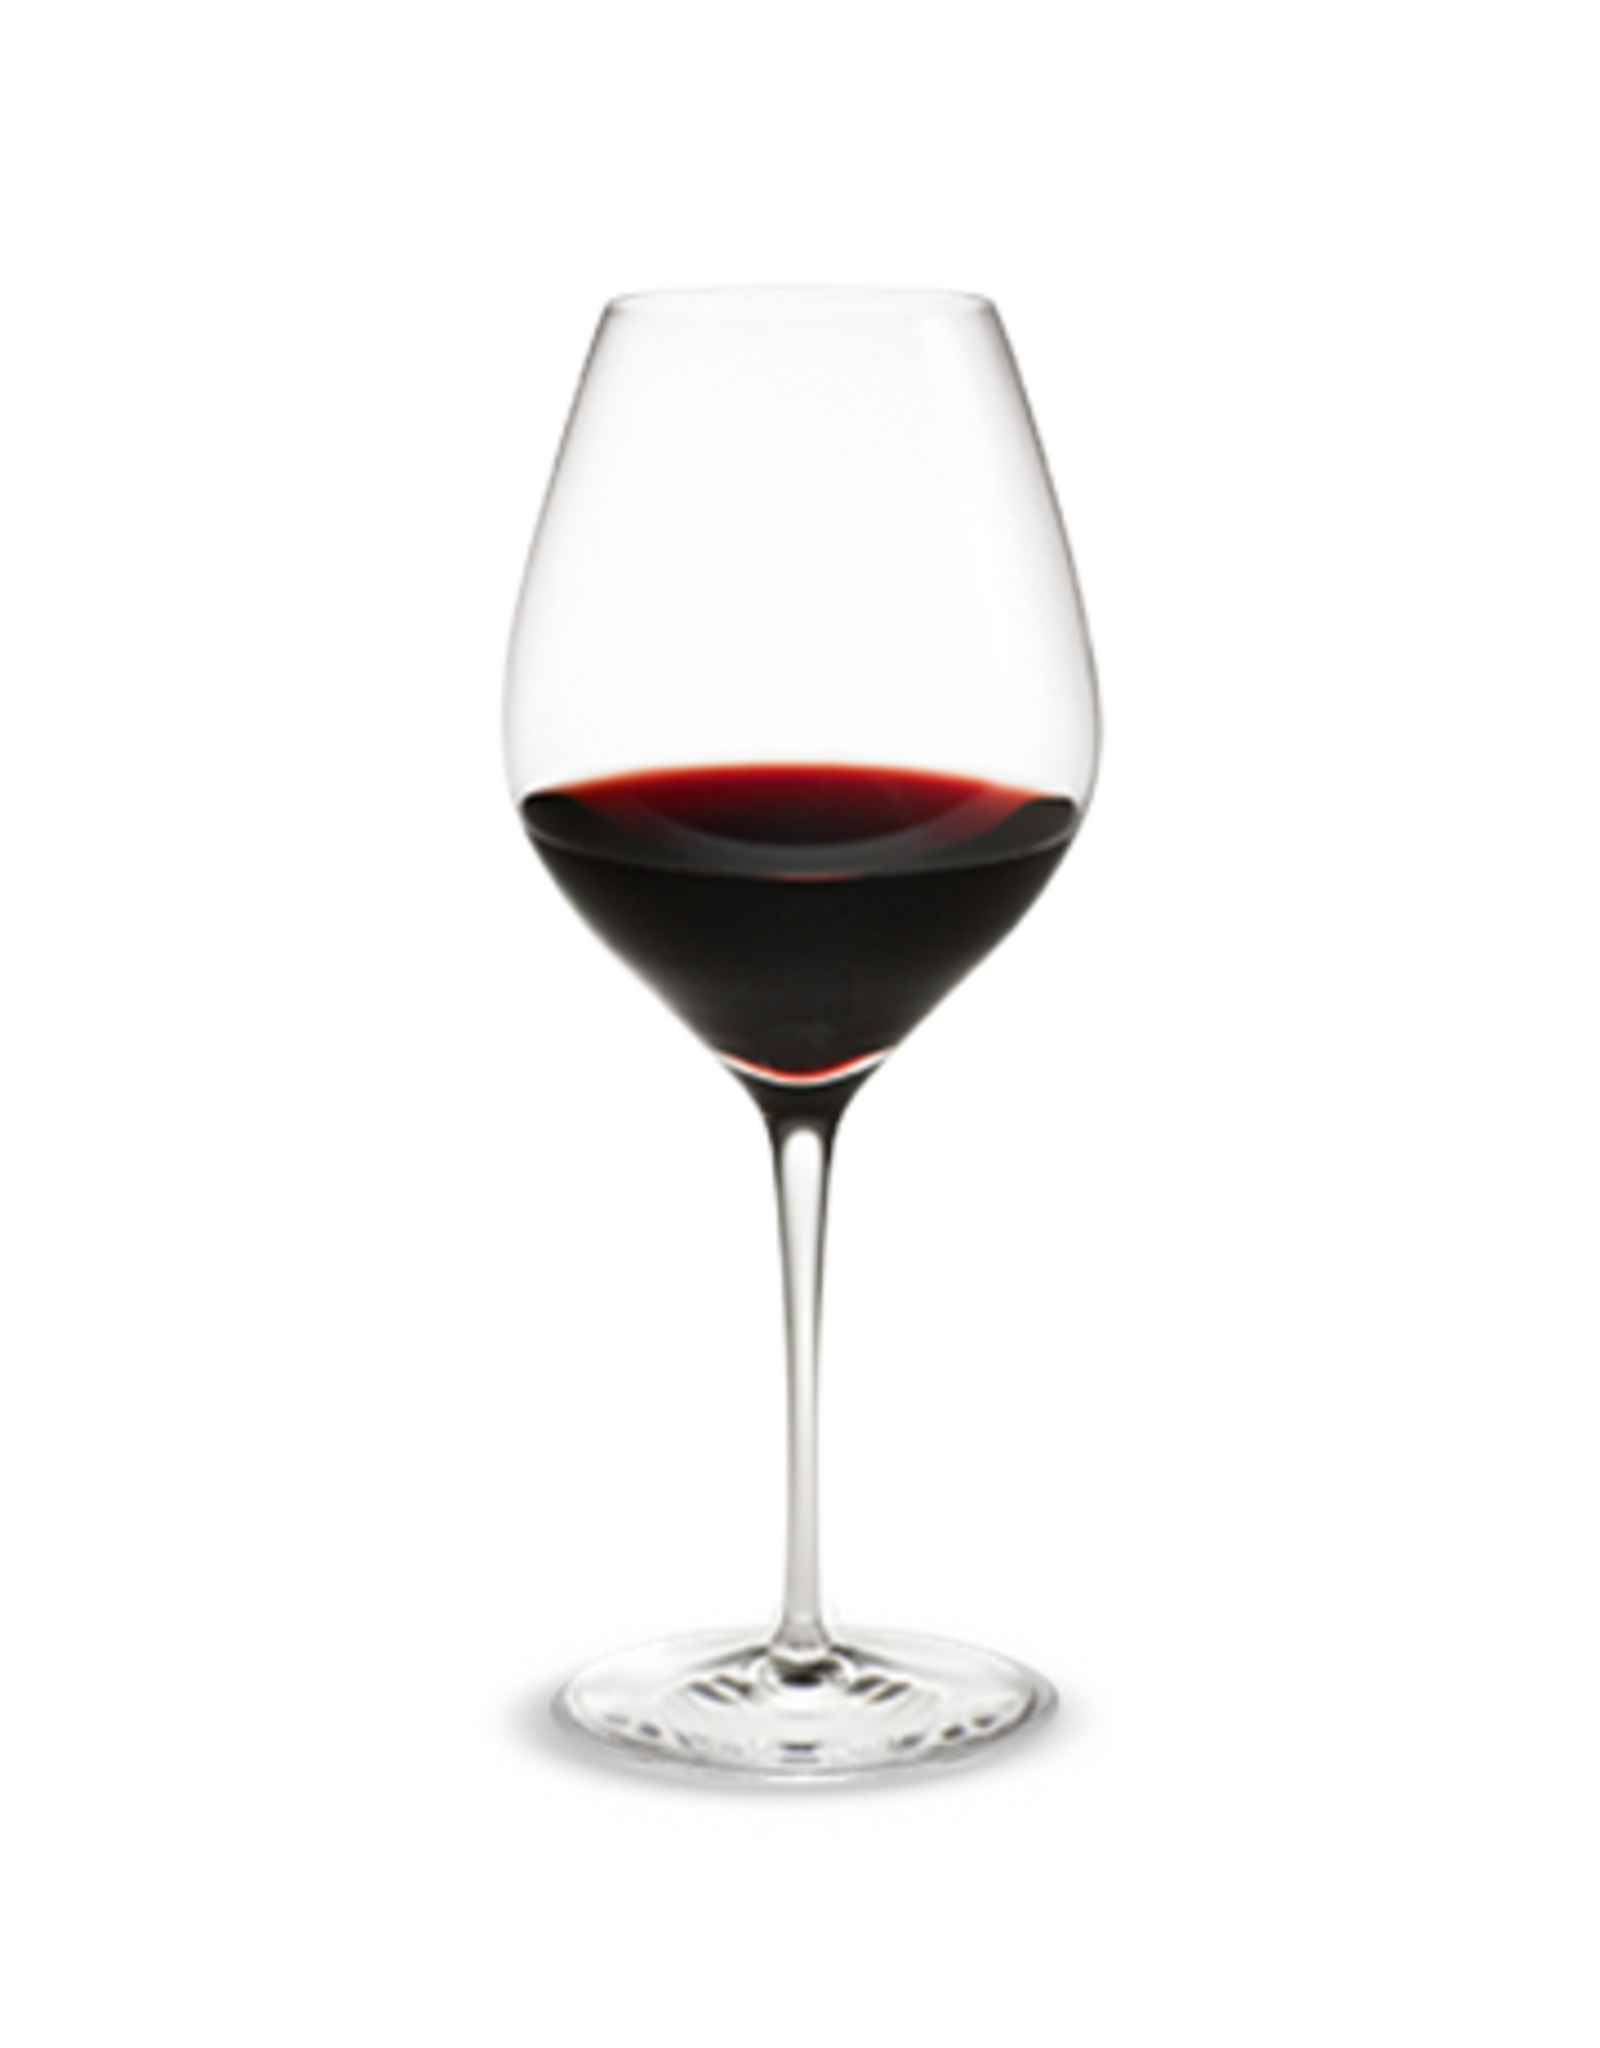 Holmegaard Red Wine Glass